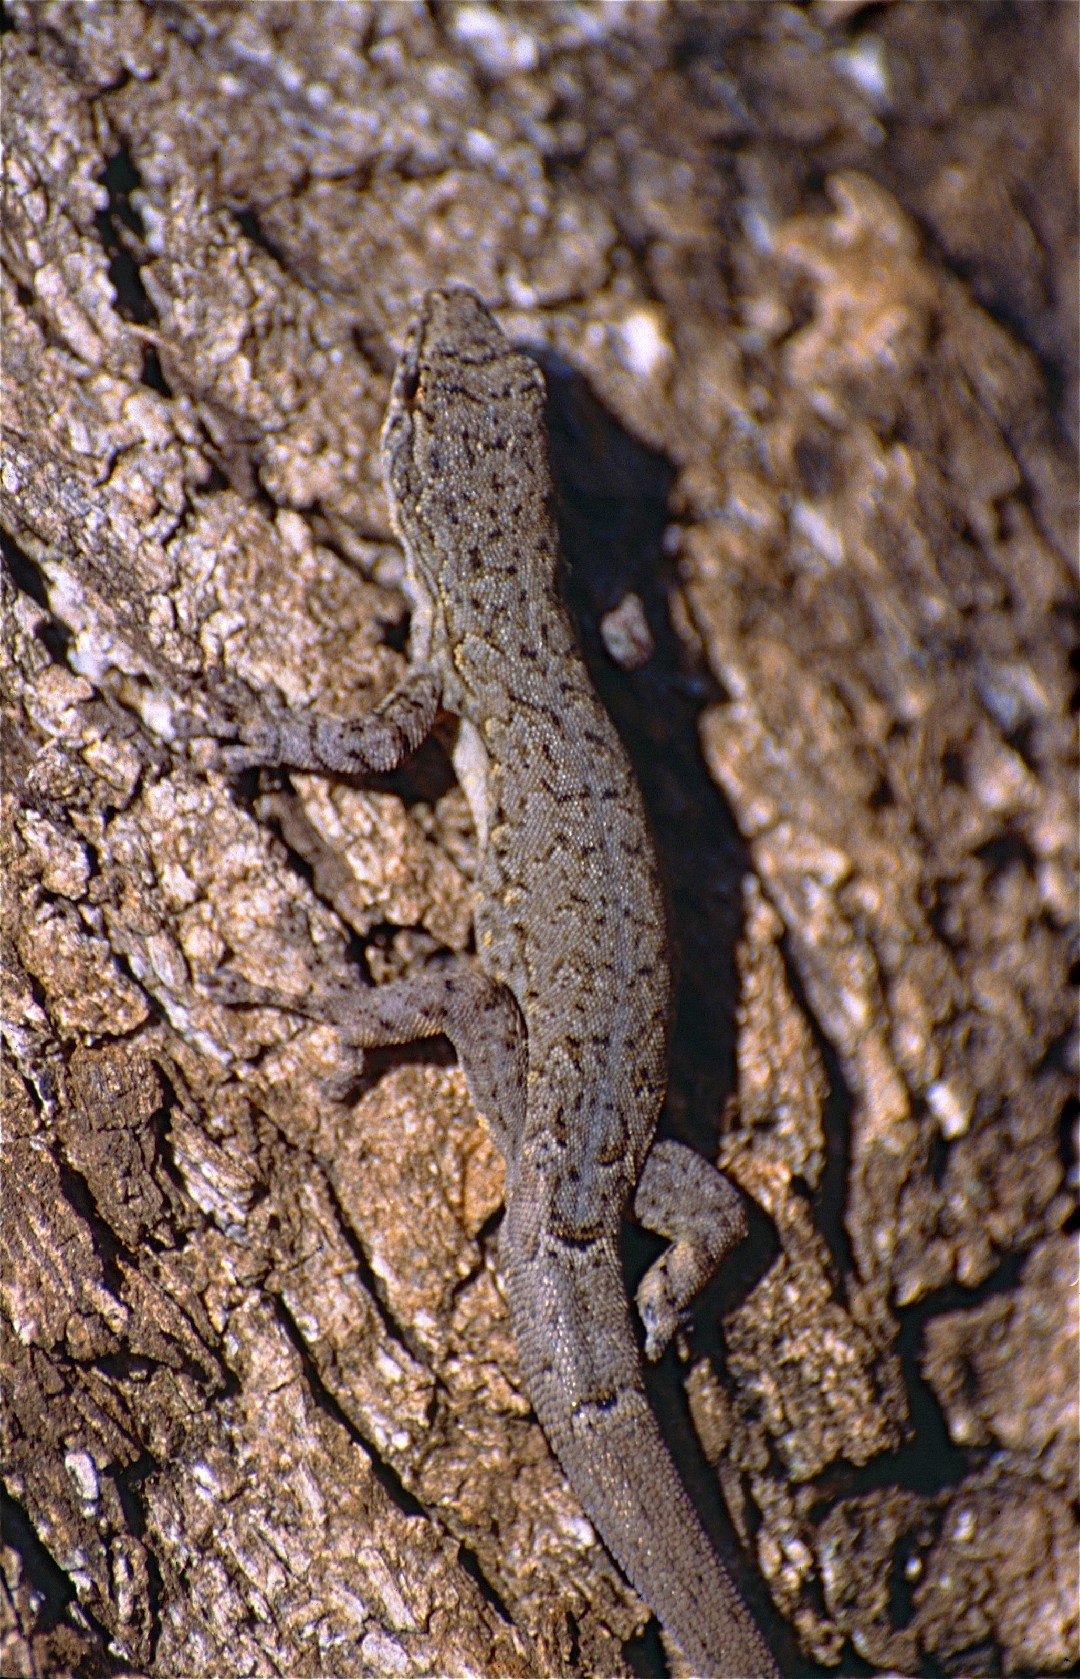 Lygodactylus (Lygodactylus)